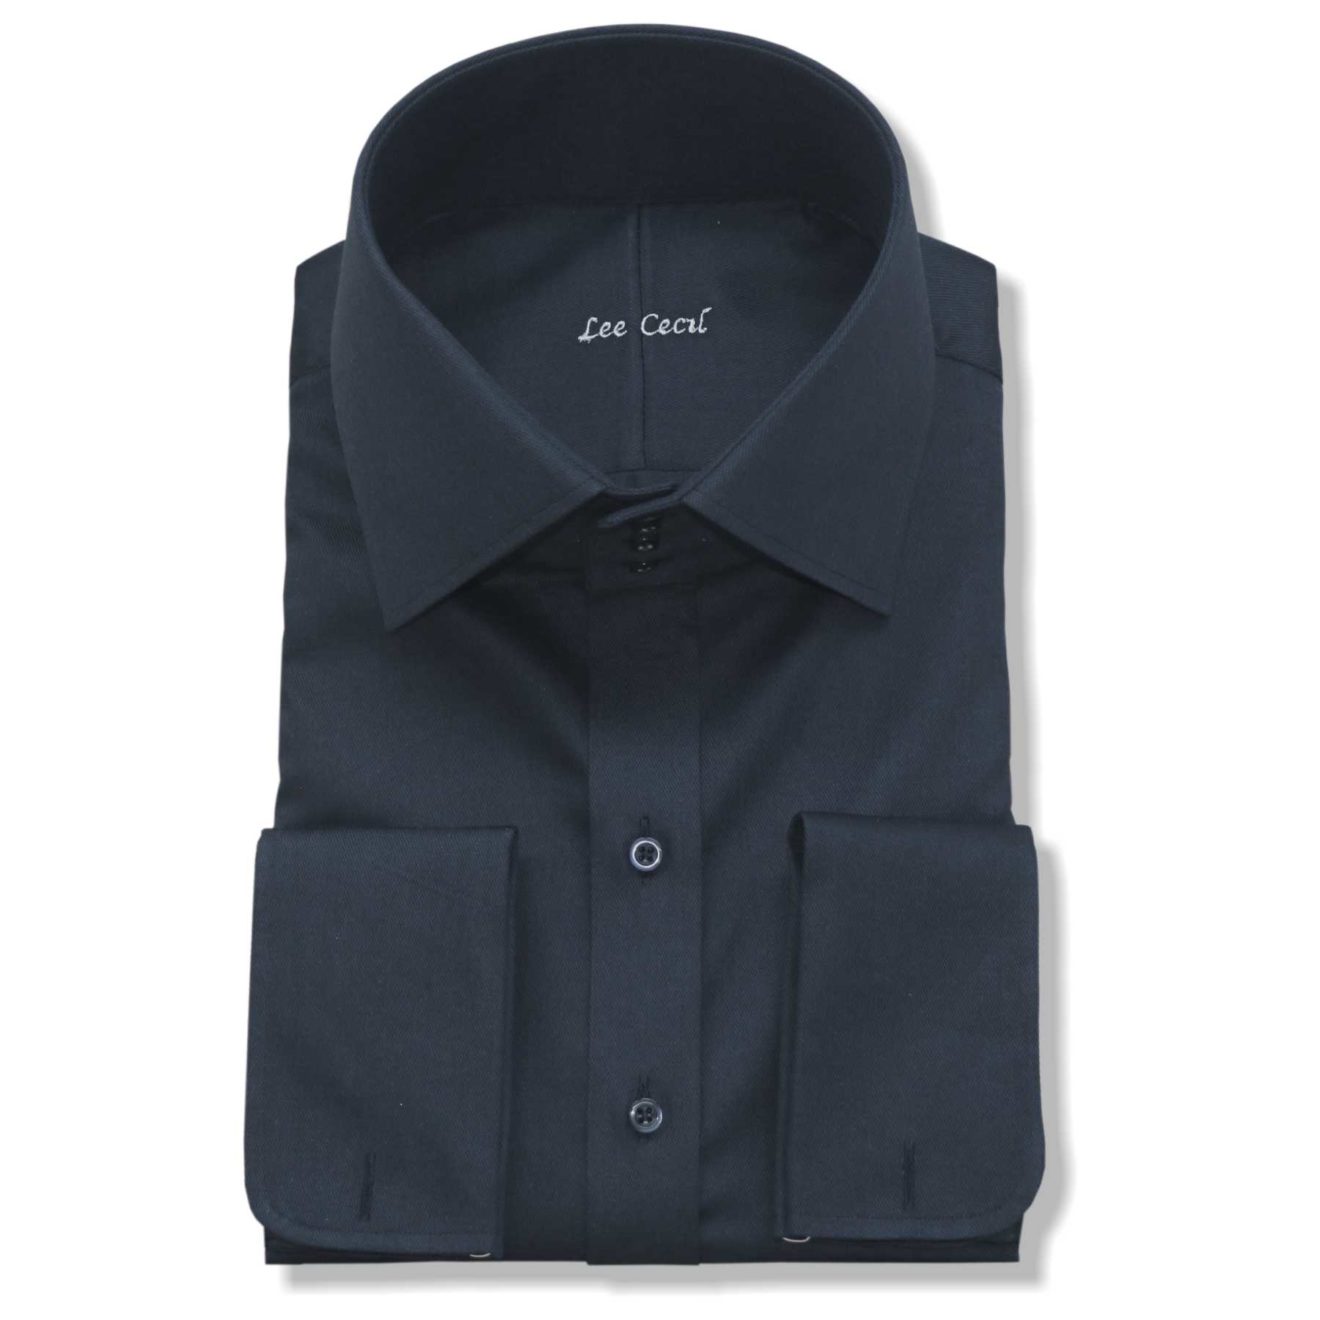 Black high Spread collar - John Clothier High Spread Black